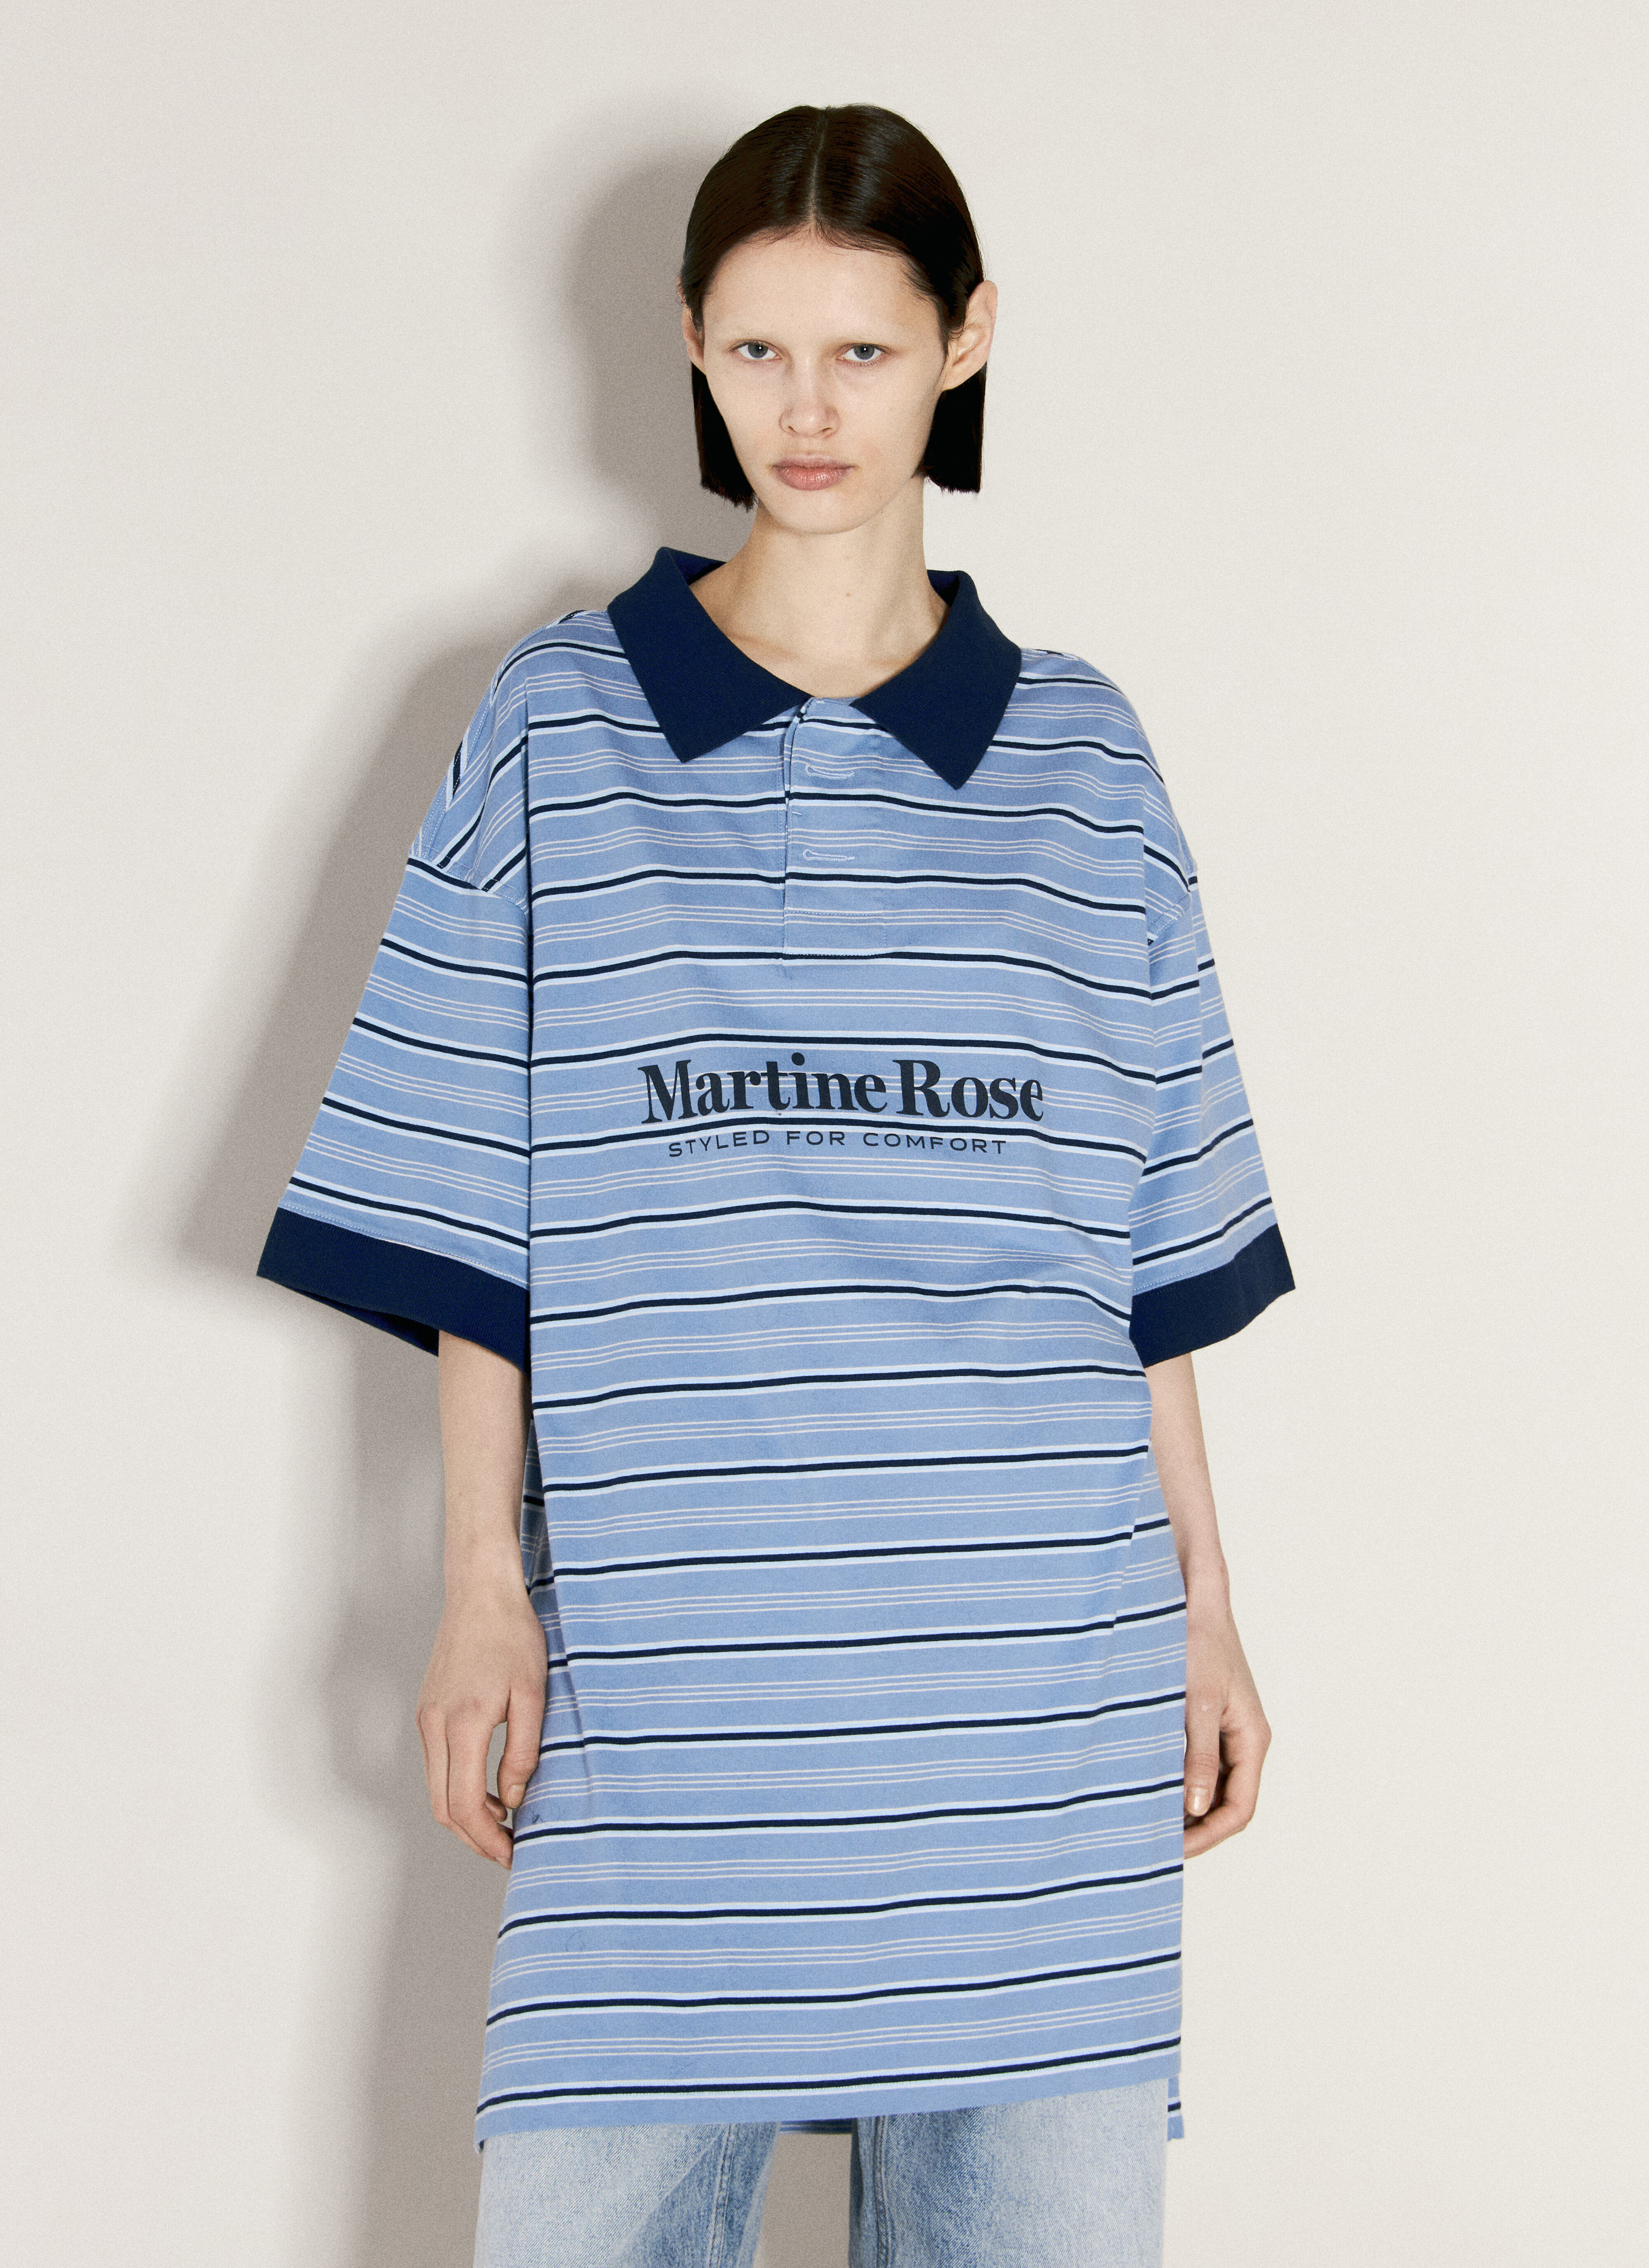 Martine Rose Striped Polo Shirt Blue mtr0255010